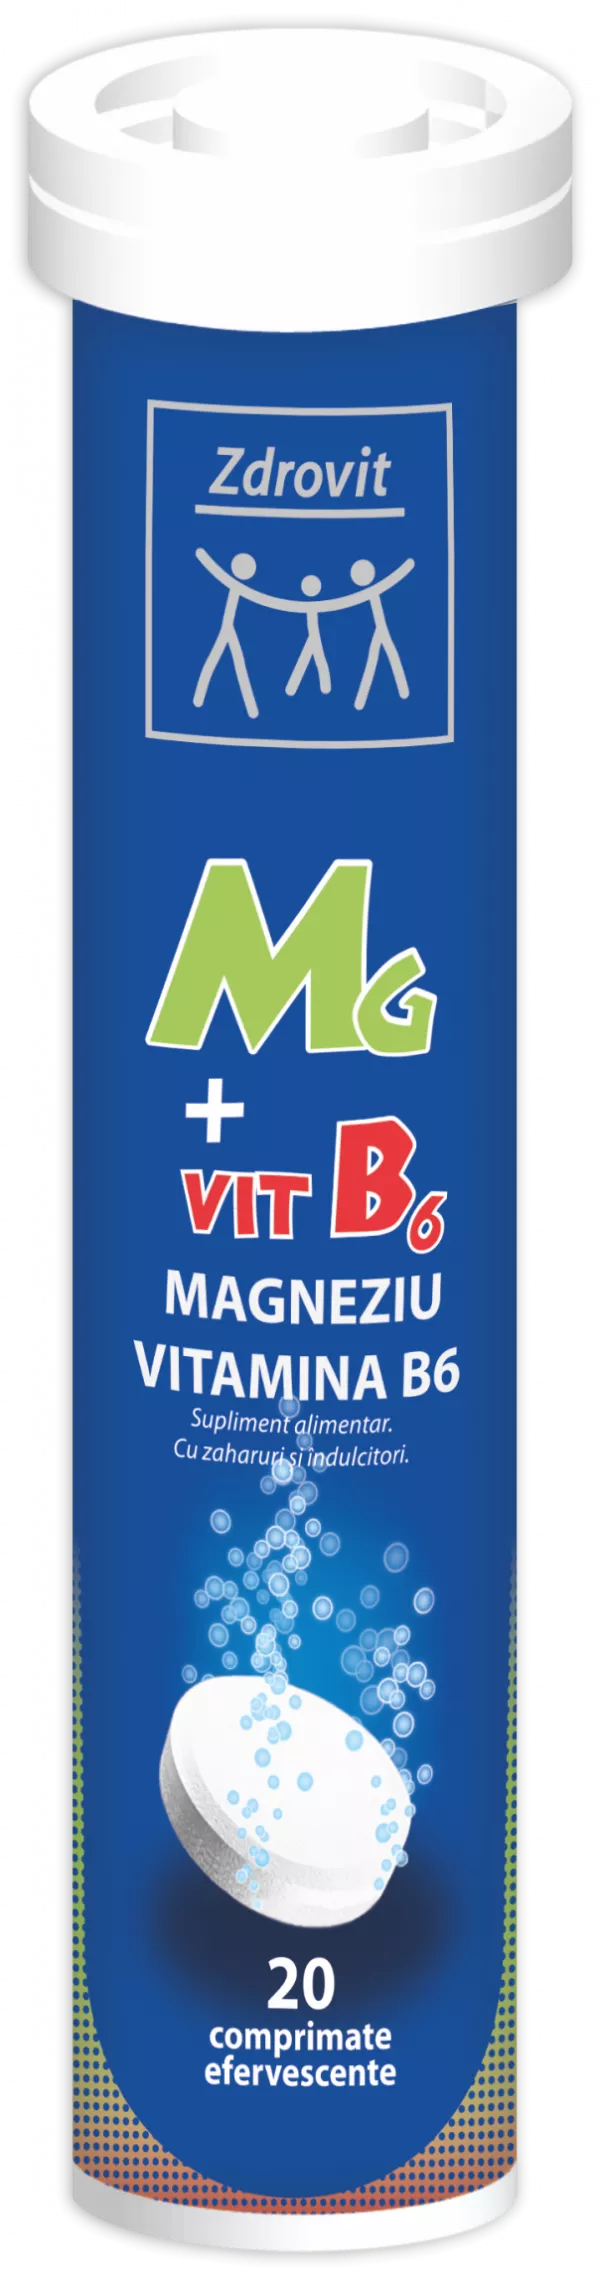 Magneziu+B6 x 20cpr eff (Zdrovit)